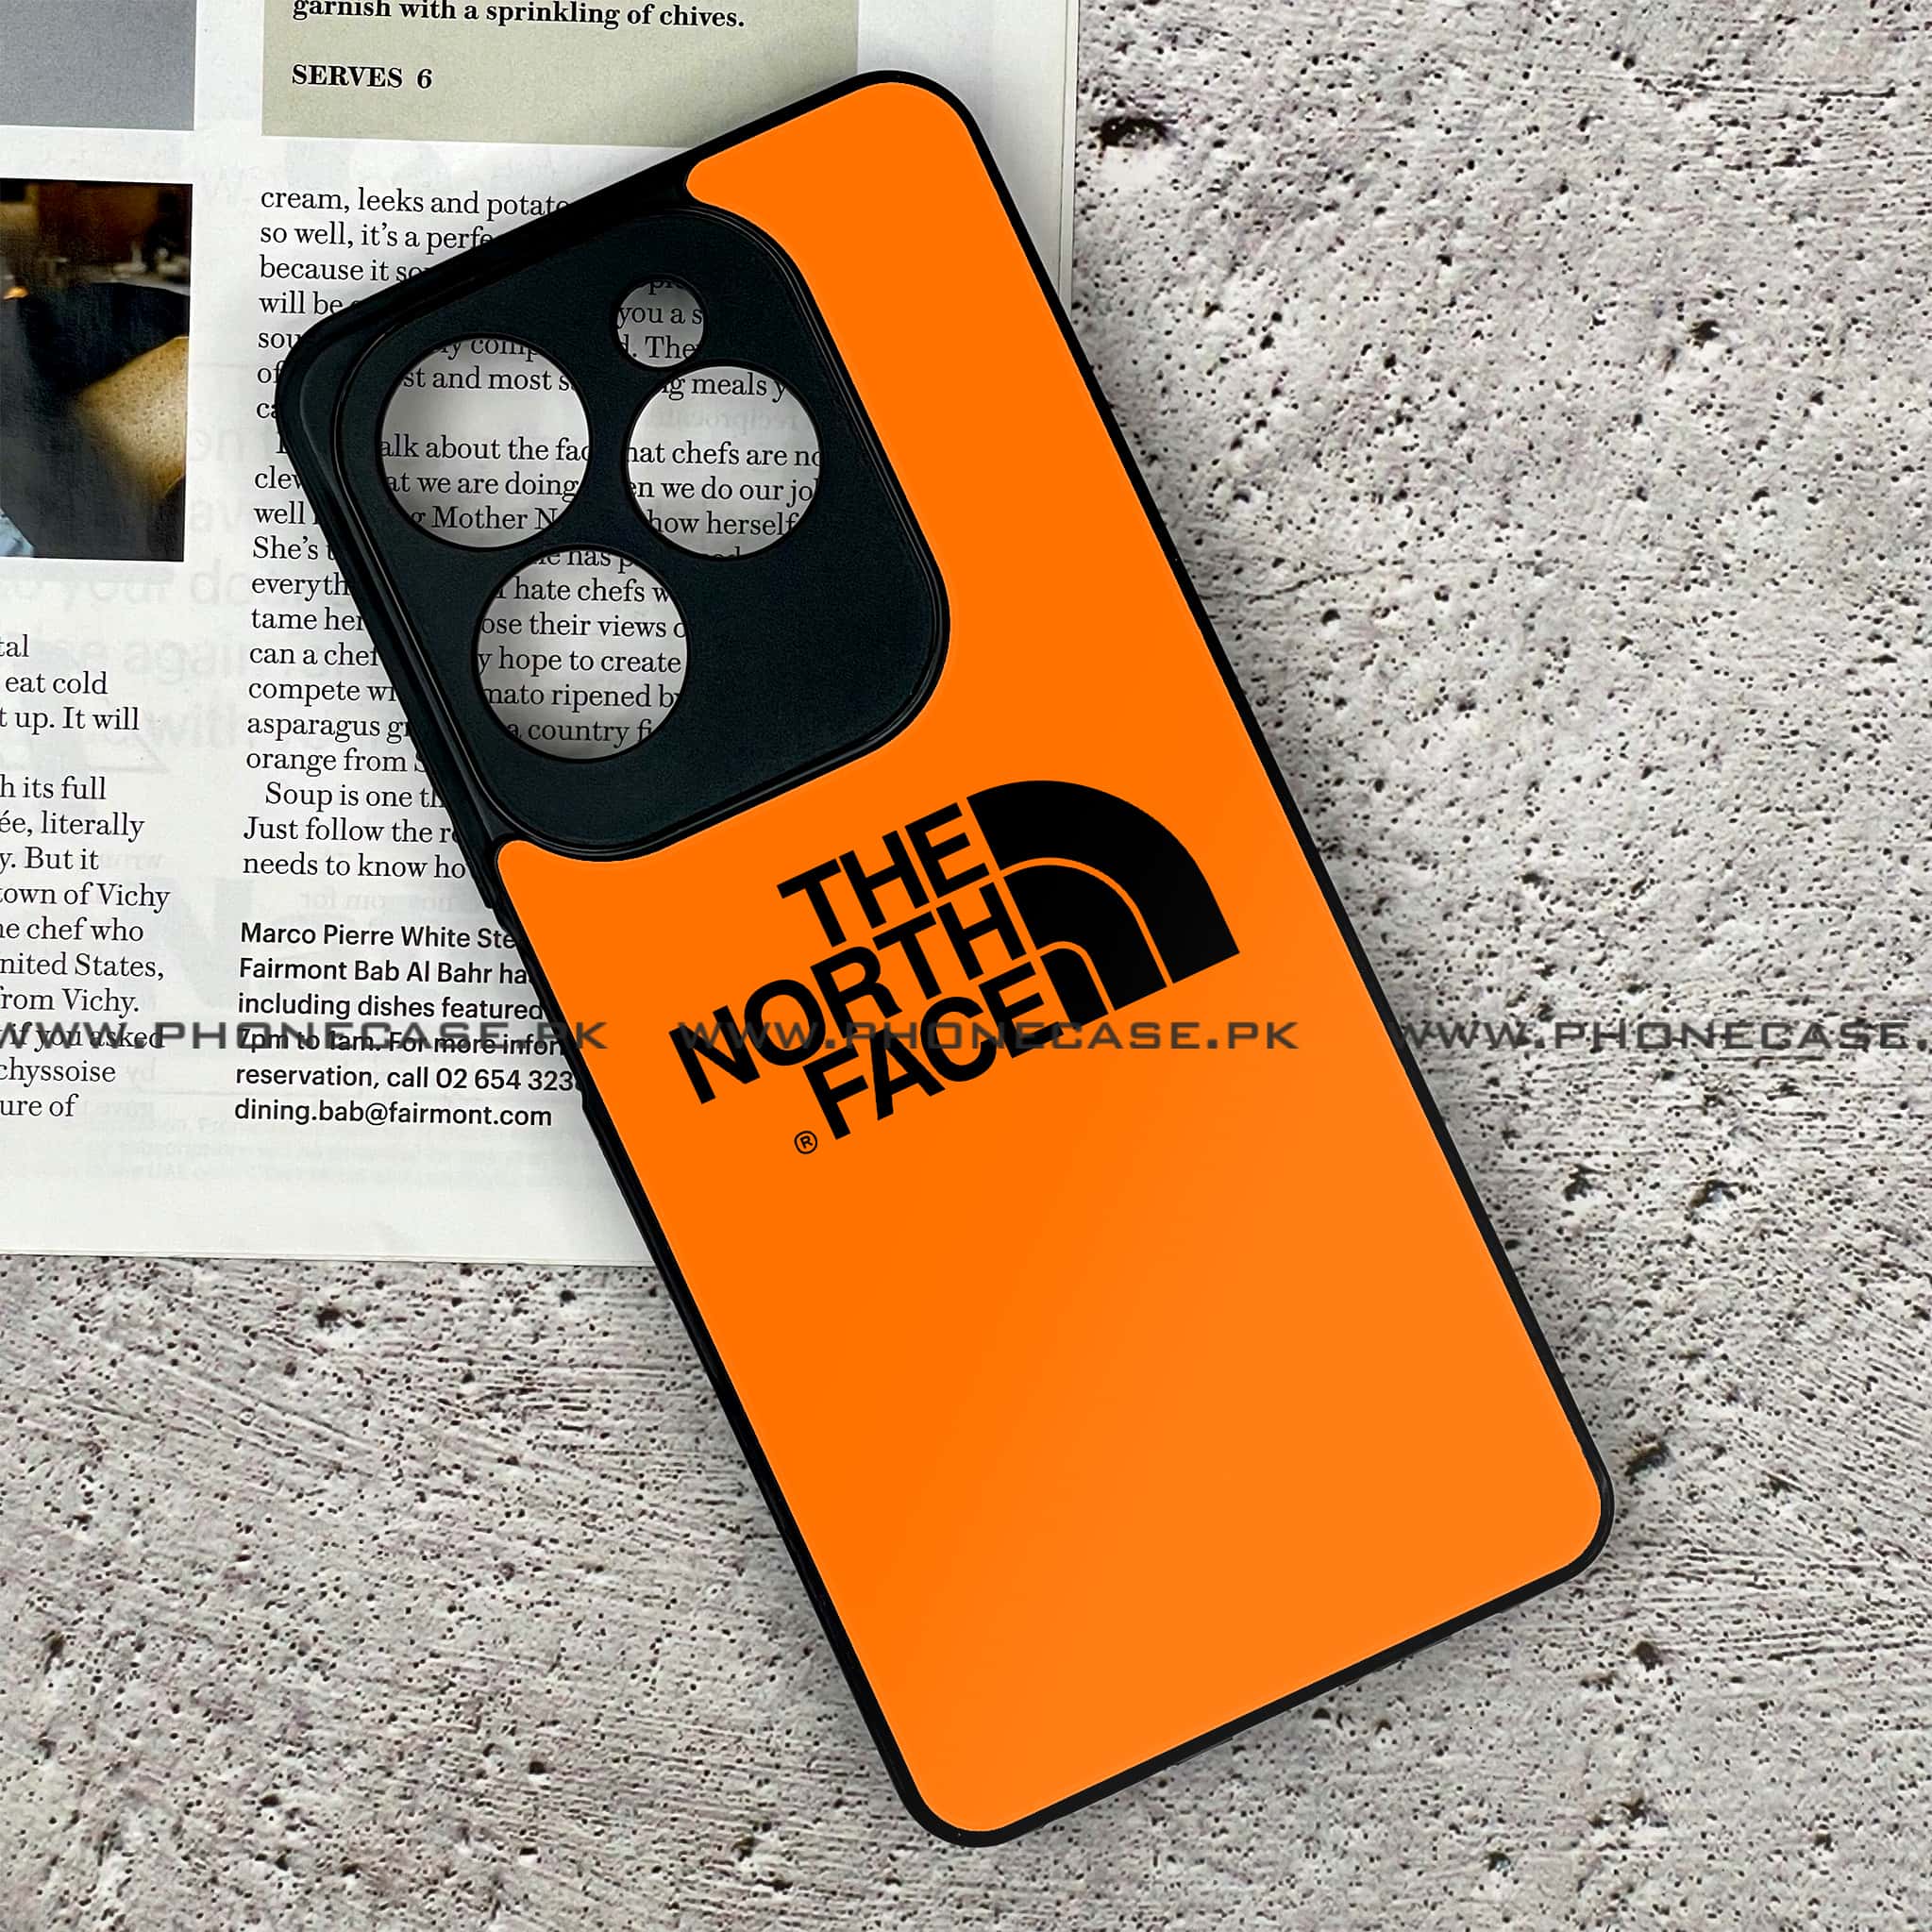 Infinix Hot 40 Pro - The North Face Series - Premium Printed Glass soft Bumper shock Proof Case